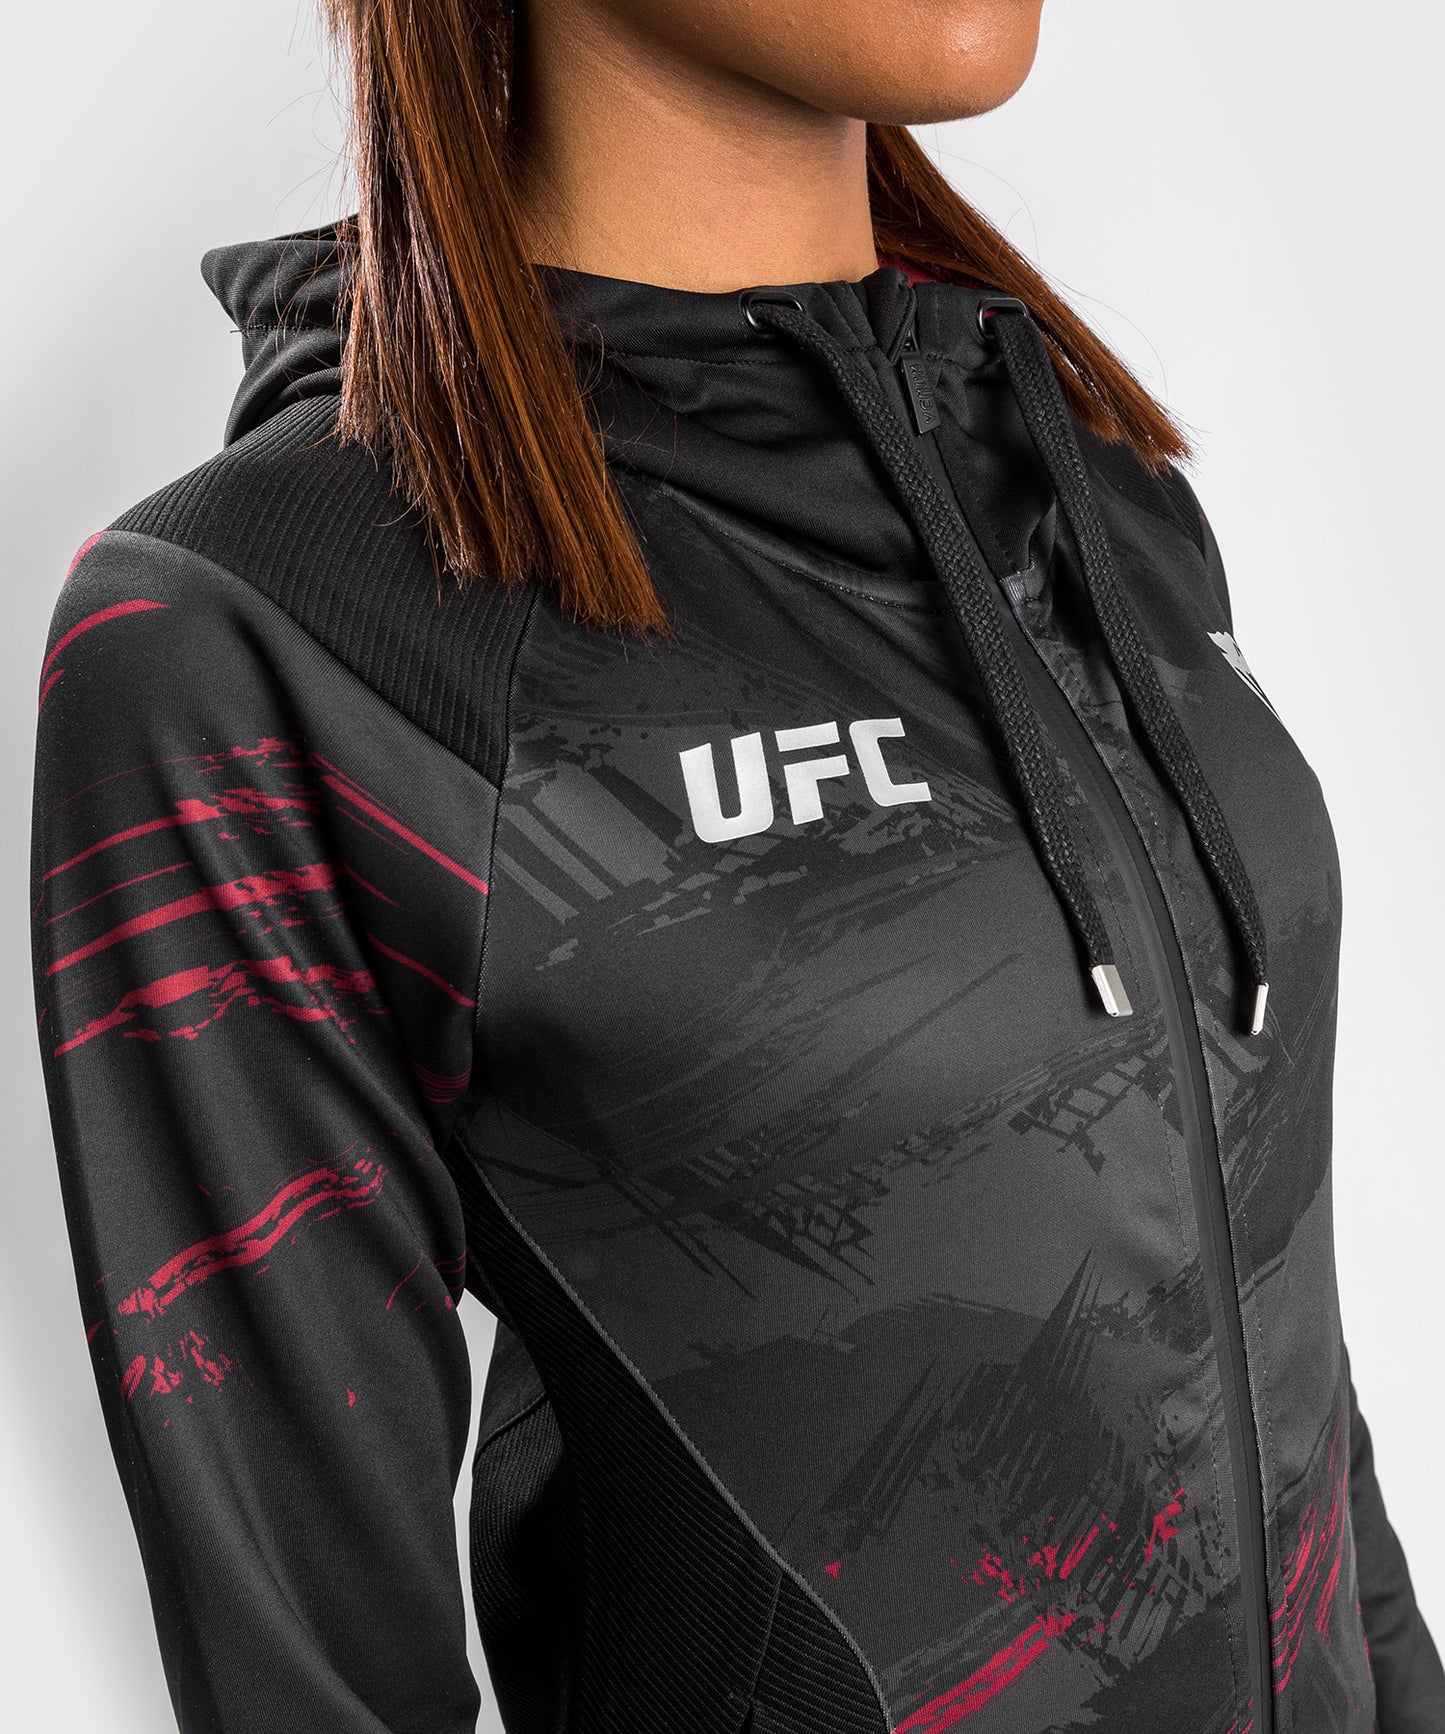 UFC Venum Authentic Fight Week 2.0 Women’s Zip Hoodie - Black/Red